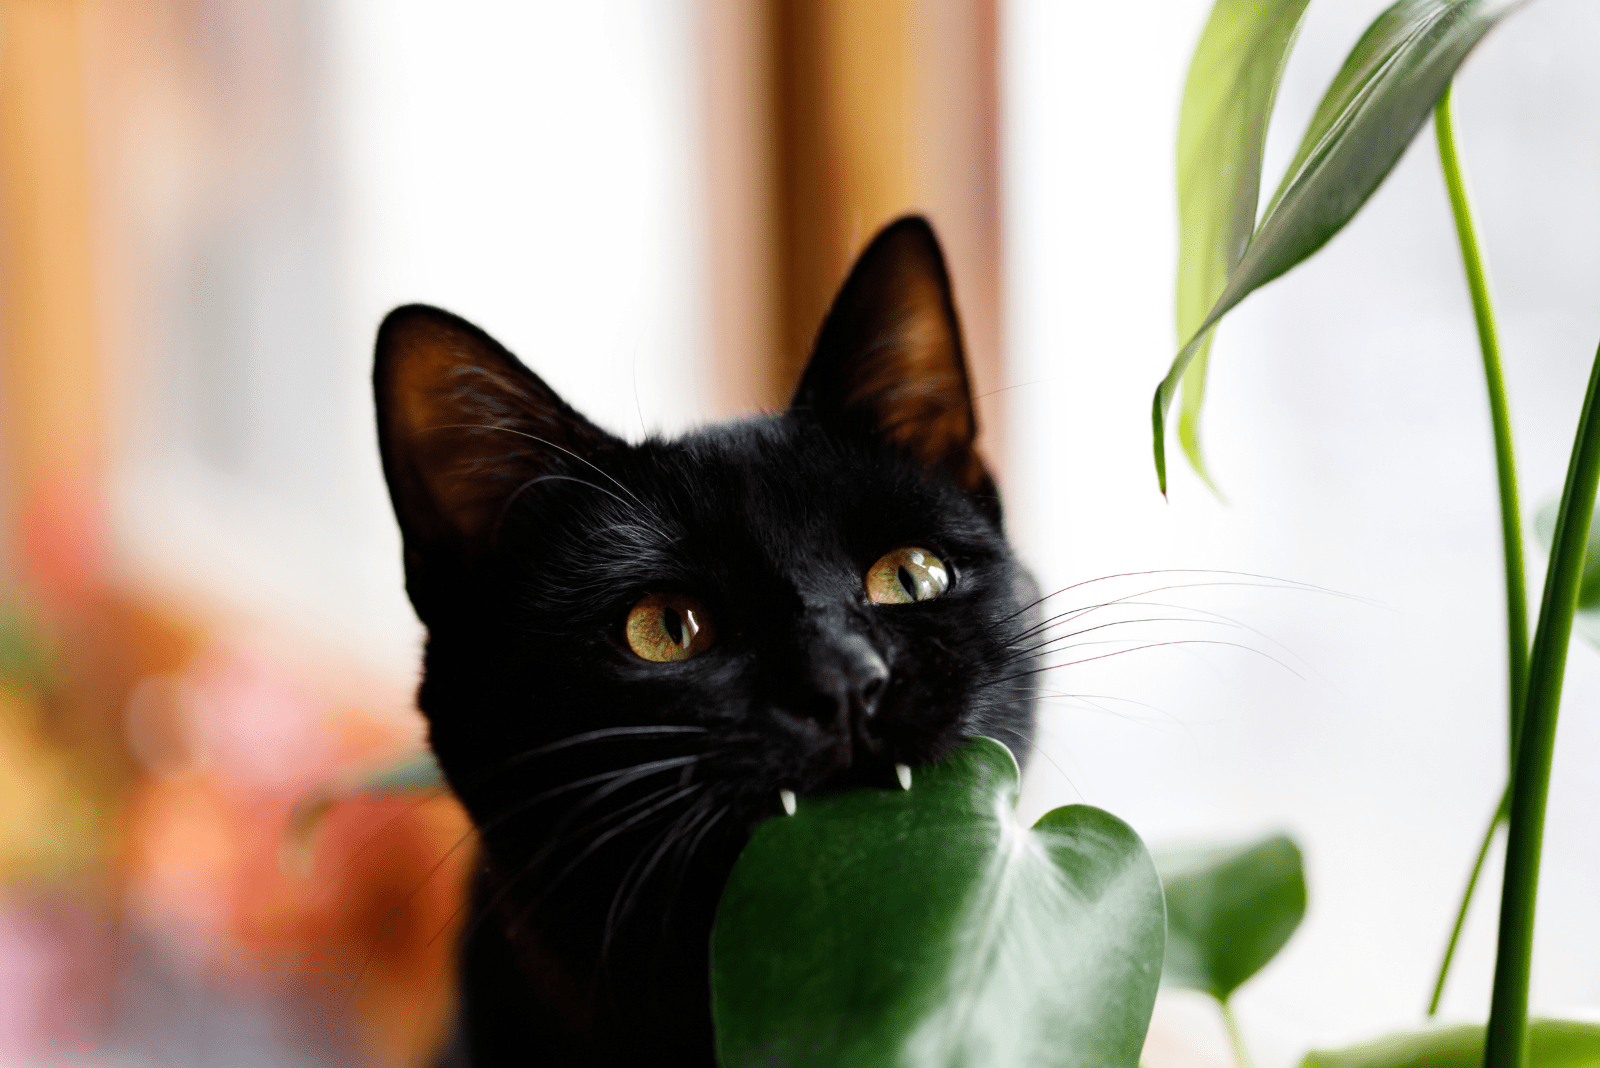 the black cat bites the flowers